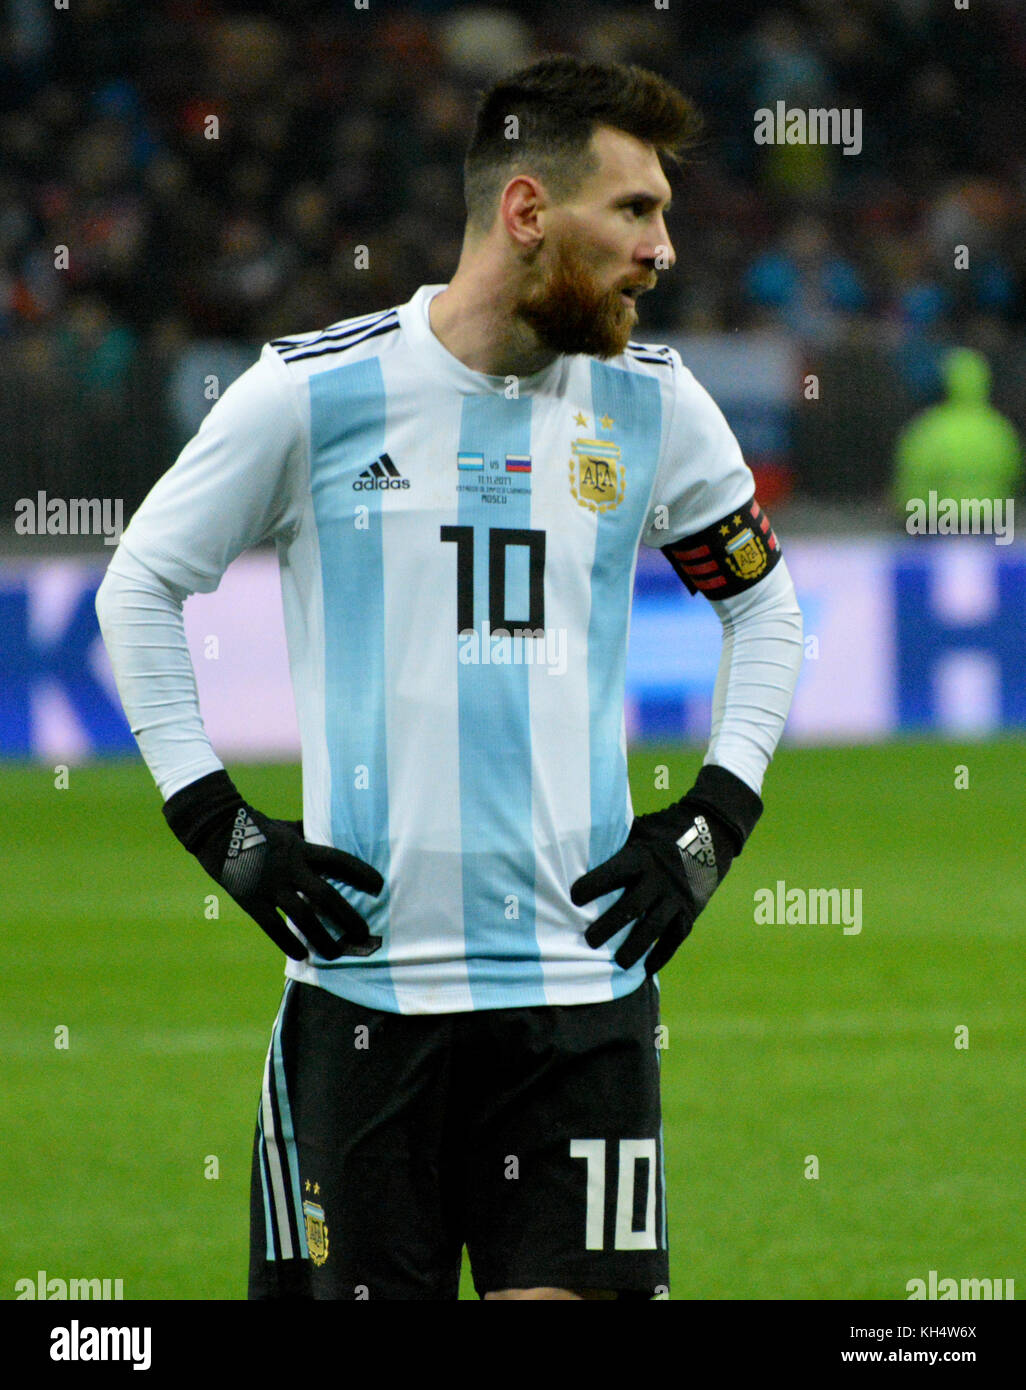 Argentina's football captains' shirts